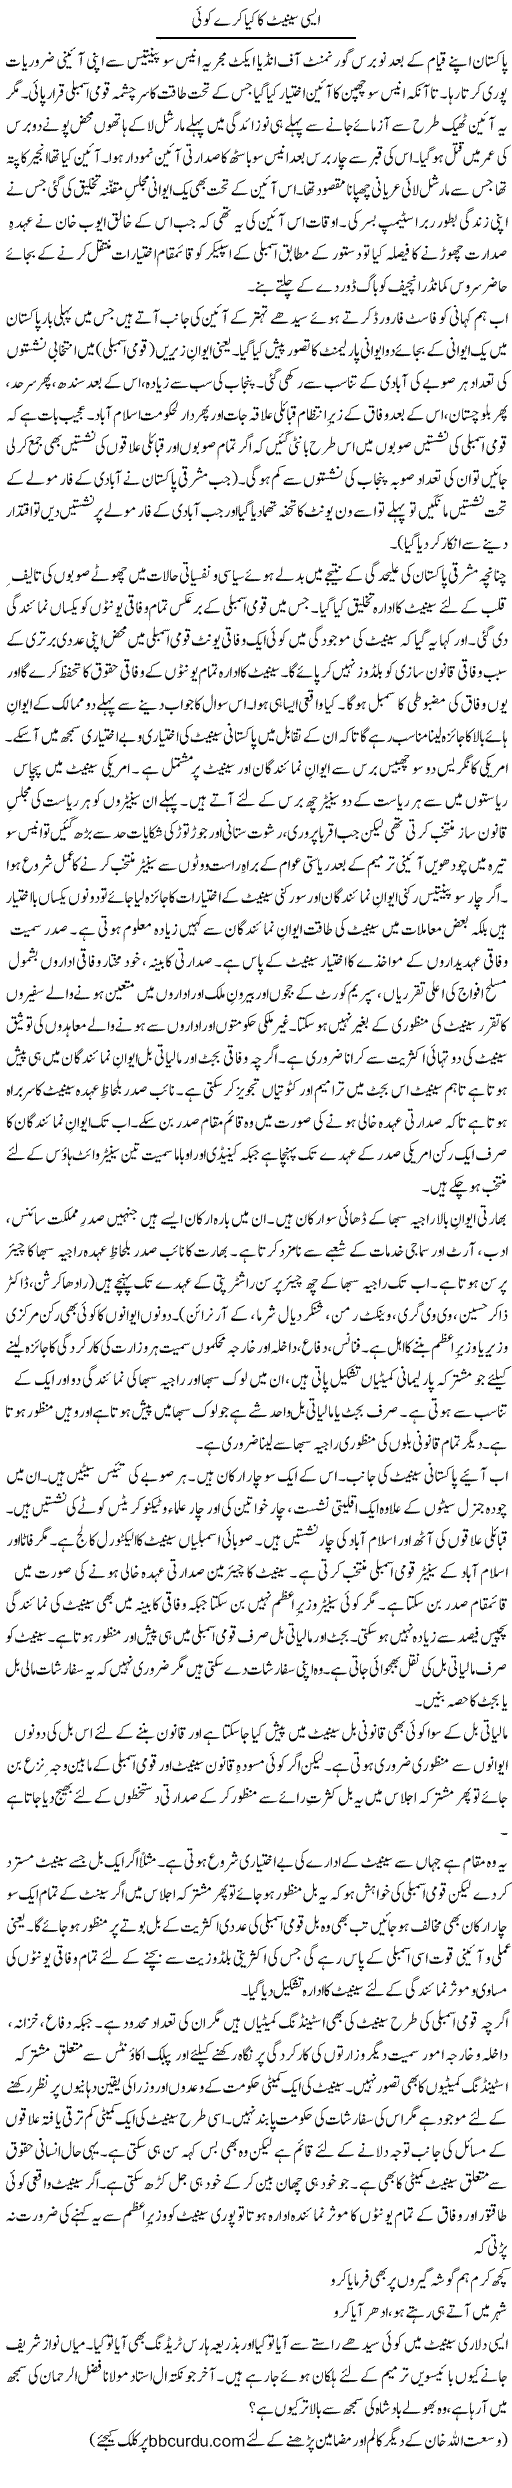 Aisi Senate Ka Kya Kare Koi | Wusat Ullah Khan | Daily Urdu Columns